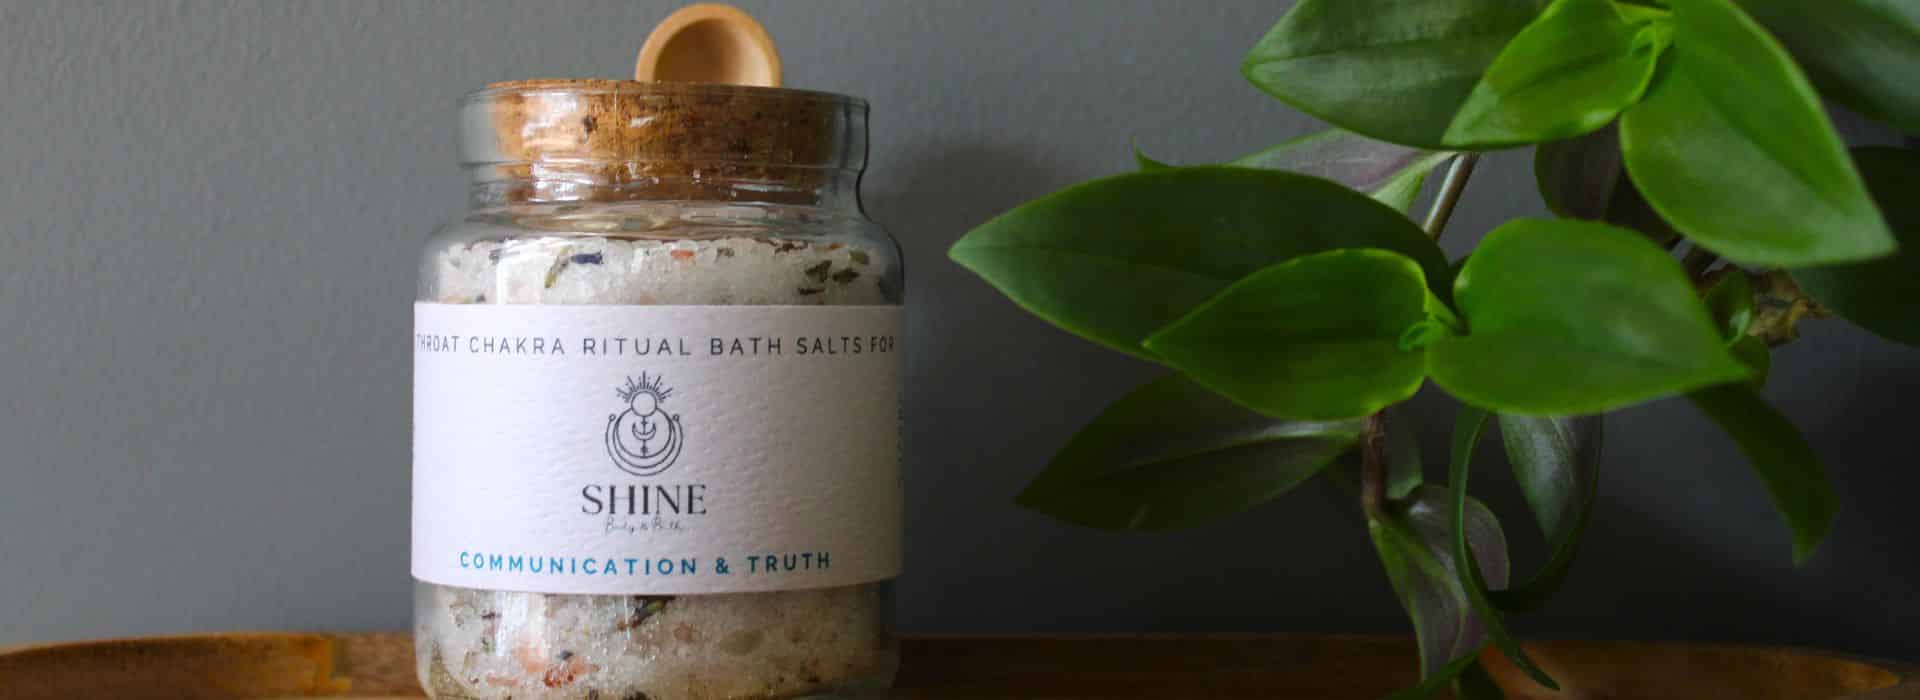 Throat Chakra Bath Salts for Communication & Truth on a shelf with greenery | The Perfect Bath: Create the Ultimate Ritual Bathing Experience | Shine Body & Bath Blog